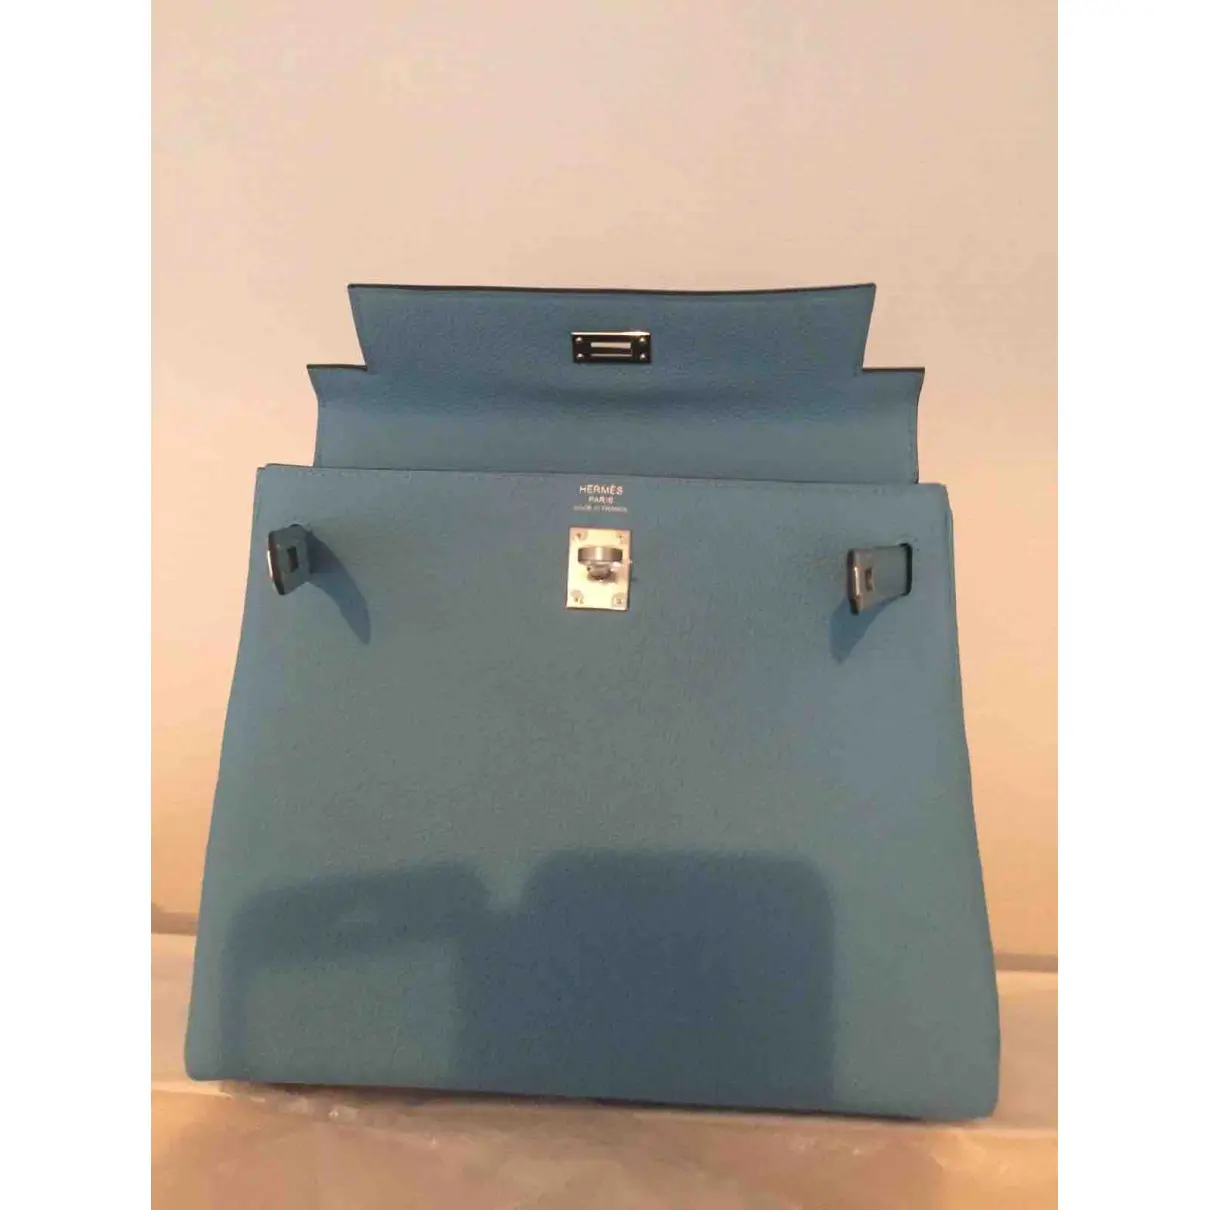 Buy Hermès Kelly 25 leather handbag online